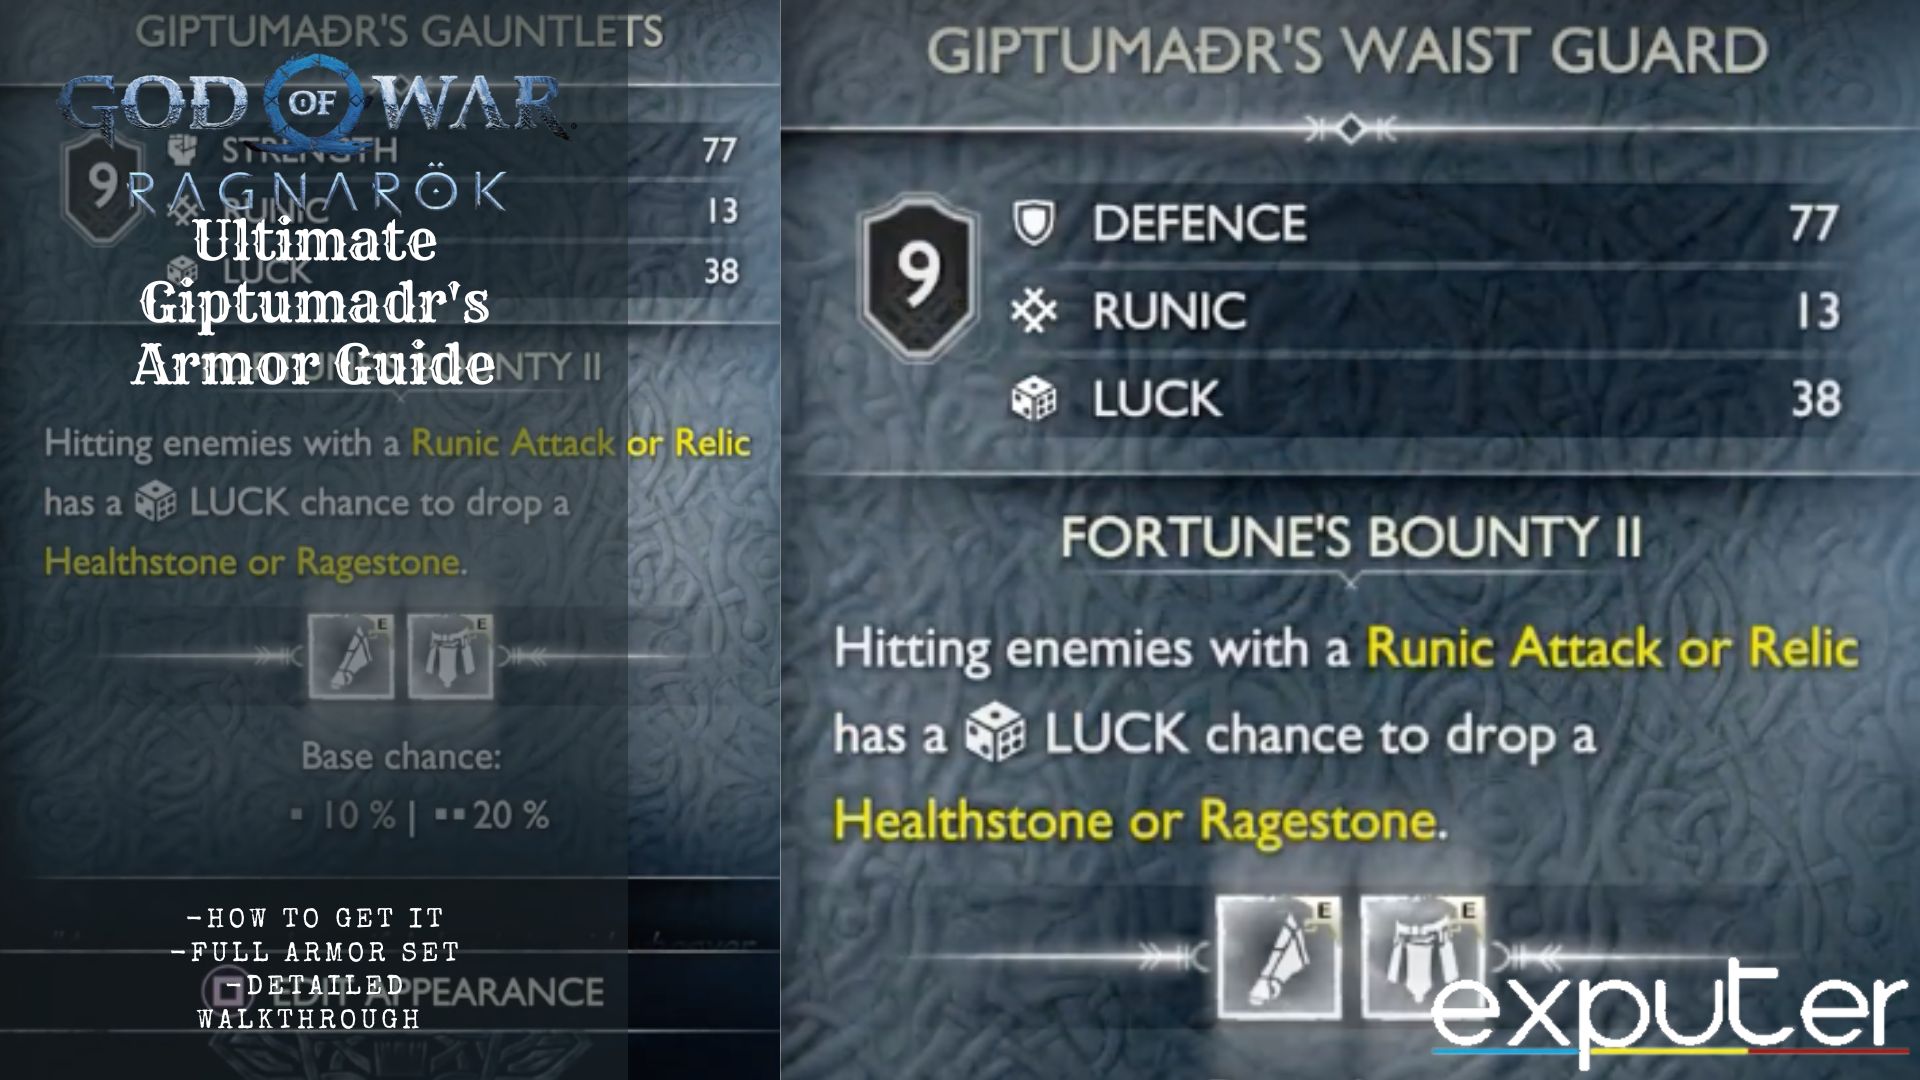 The Ultimate God of War Ragnarok Giptumadr's Armor